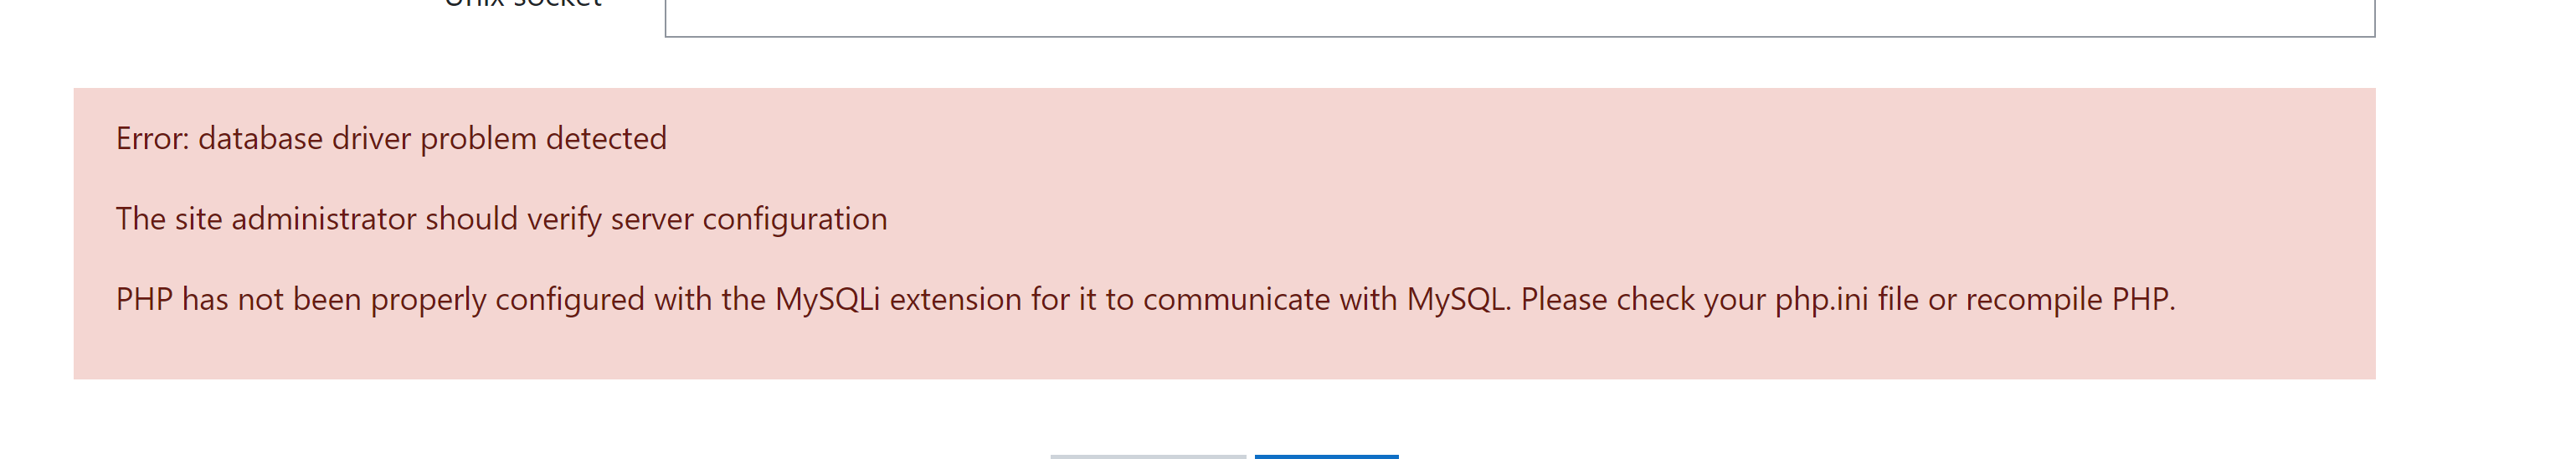 error database driver problem rilevato mssql